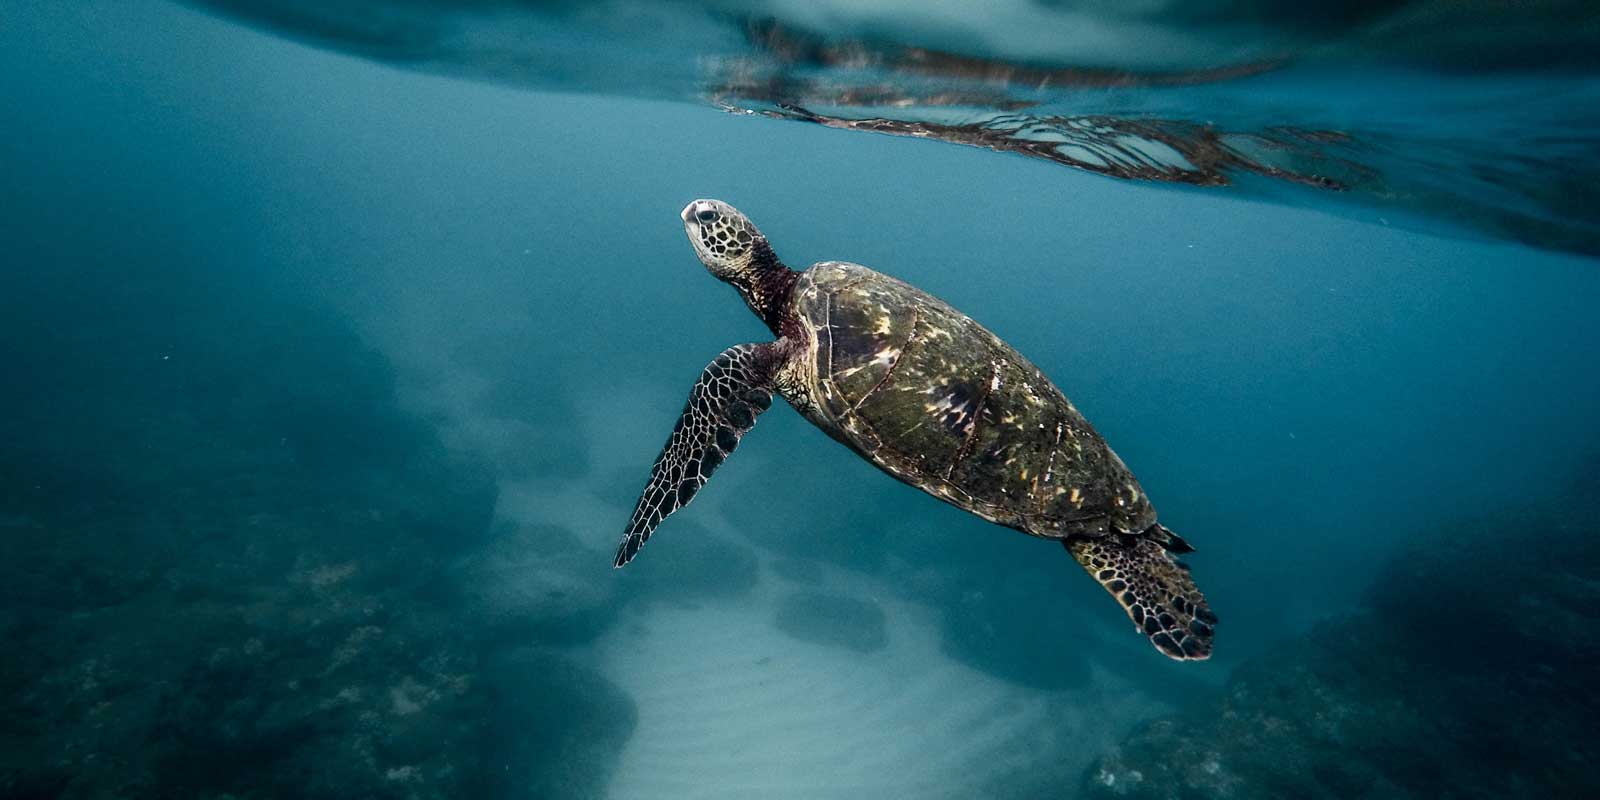 Closeup of a sea turtle swimming in the ocean in Hawaii